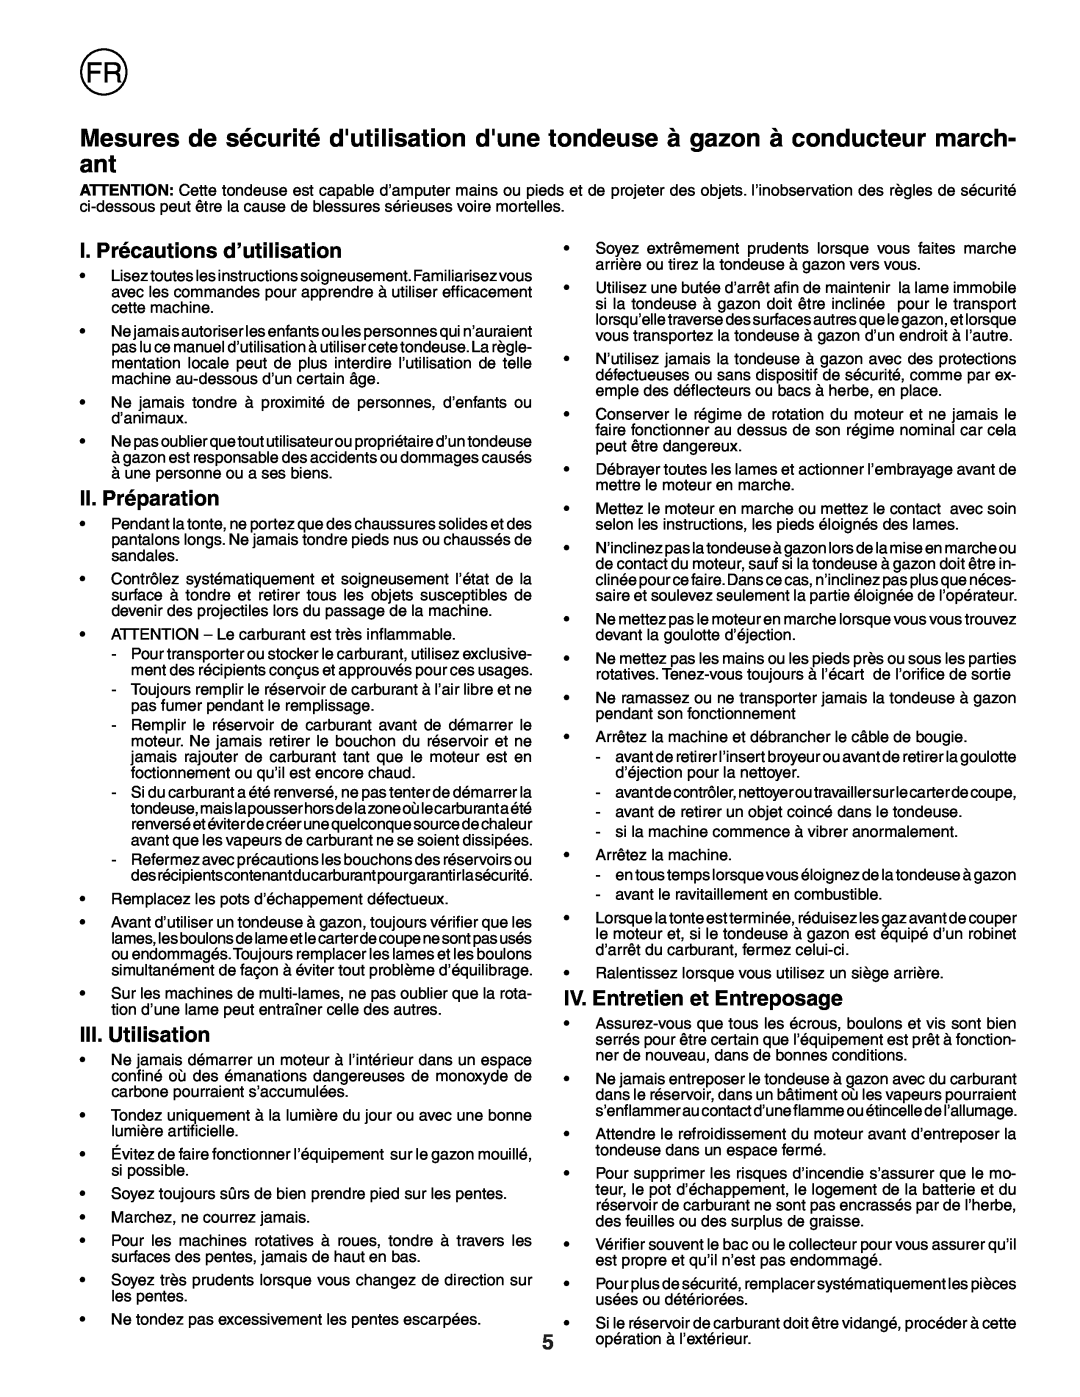 Husqvarna R52SE I. Précautions d’utilisation, II. Préparation, III. Utilisation, IV. Entretien et Entreposage 